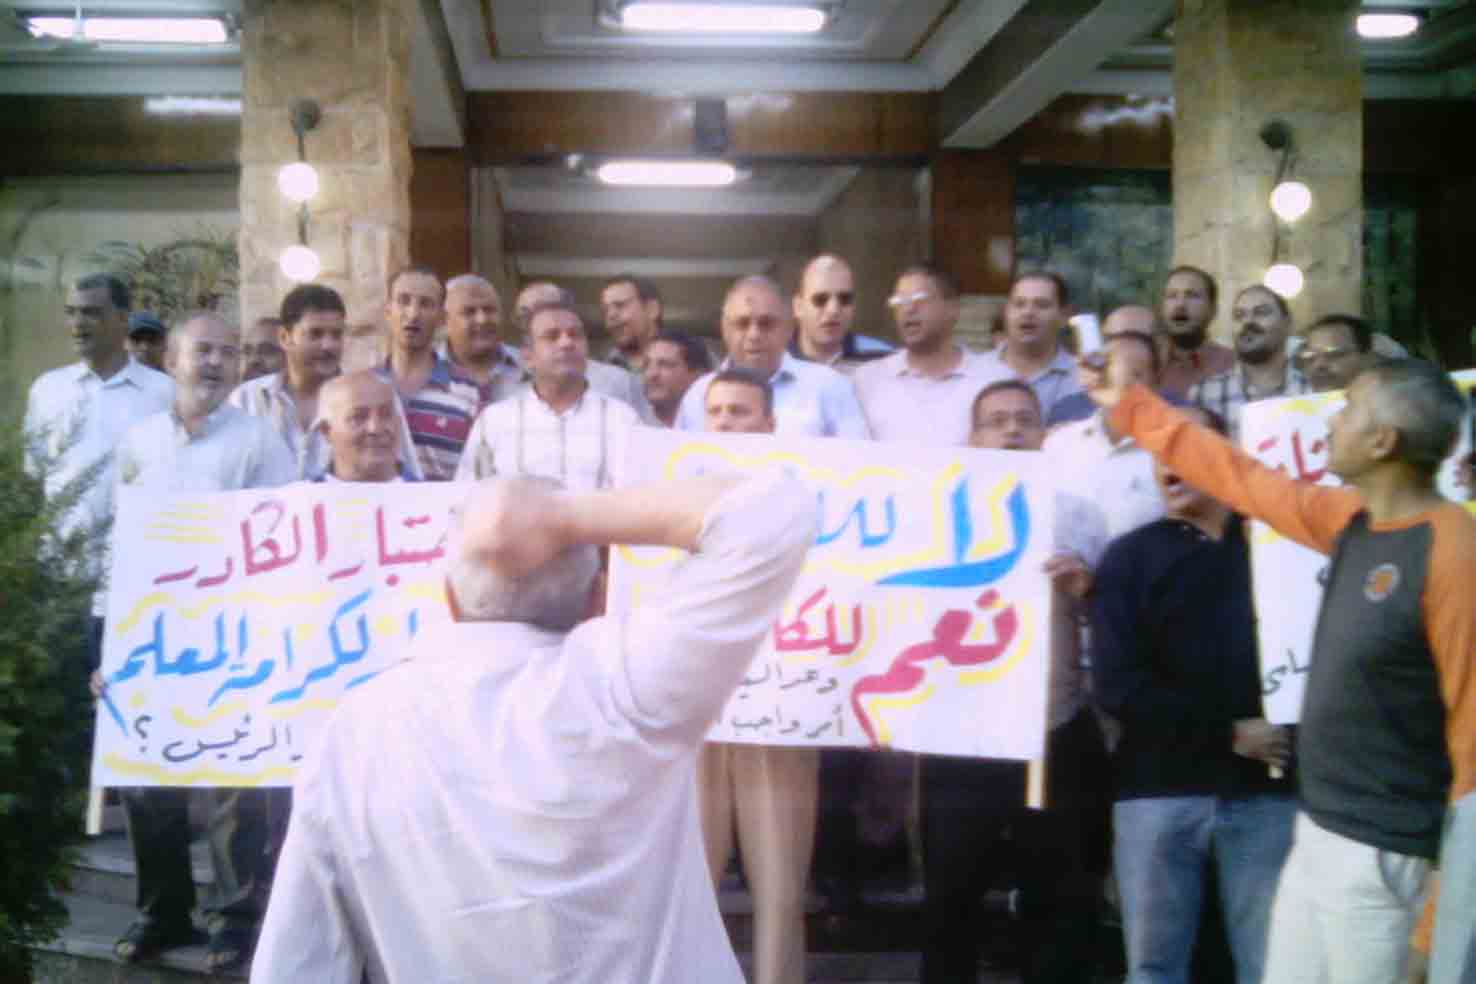 Teachers protest in Mahalla [Photo courtesy of Kareem el-Beheiry]